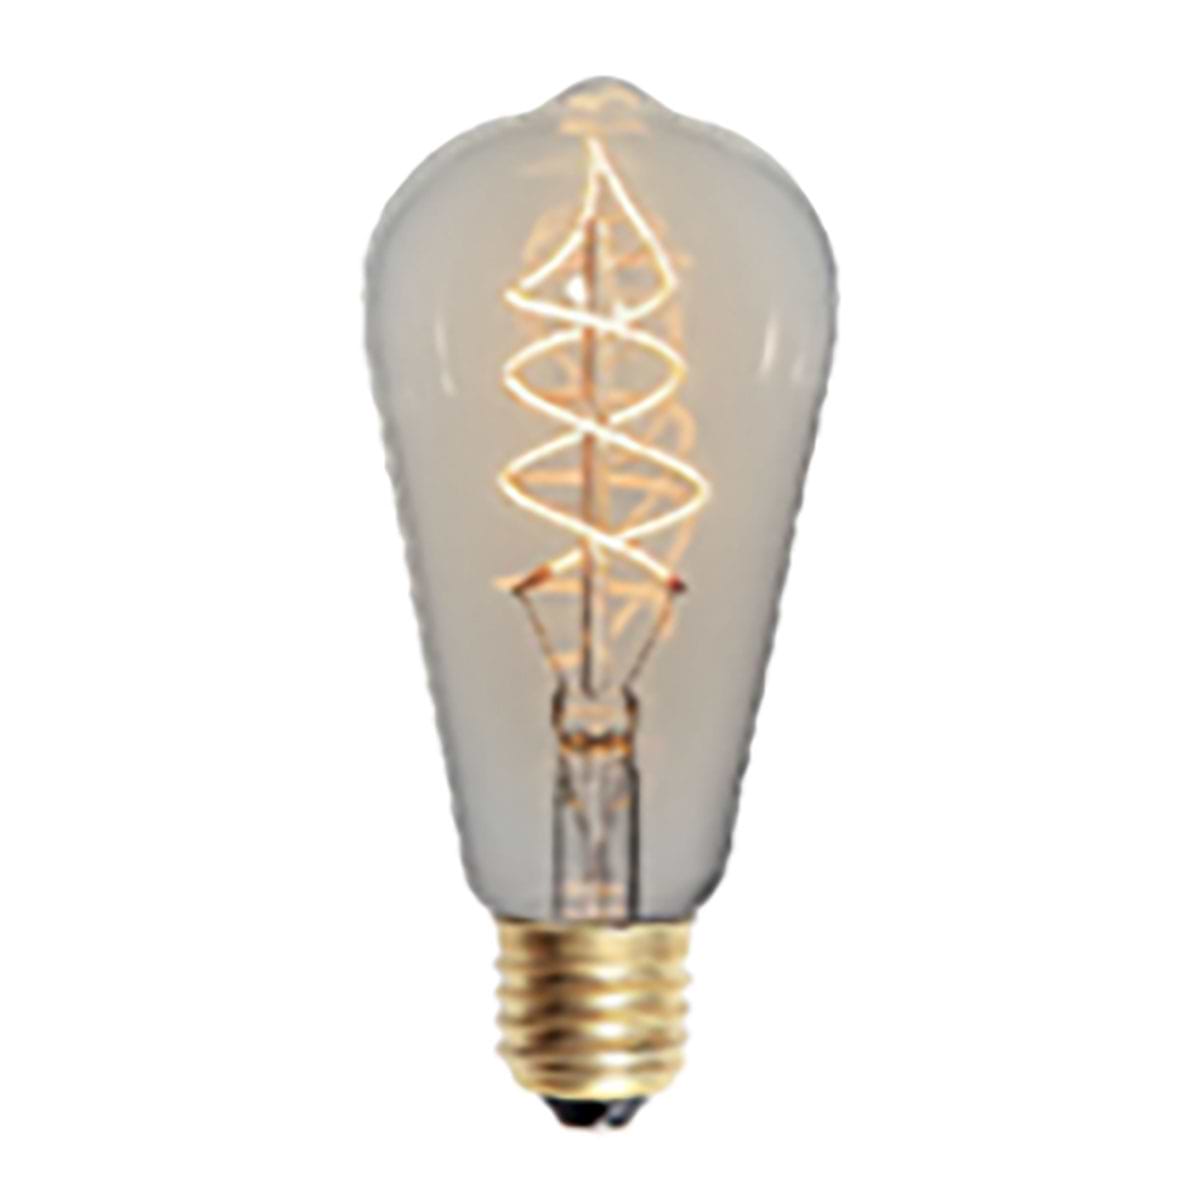 LED lamp 6W 3-step dimbaar Edison spiraal, E27 fitting, 6 Watt, dimbaar, Amber. Duurzaam, decoratief en dimbaar. LIGHT - L272136